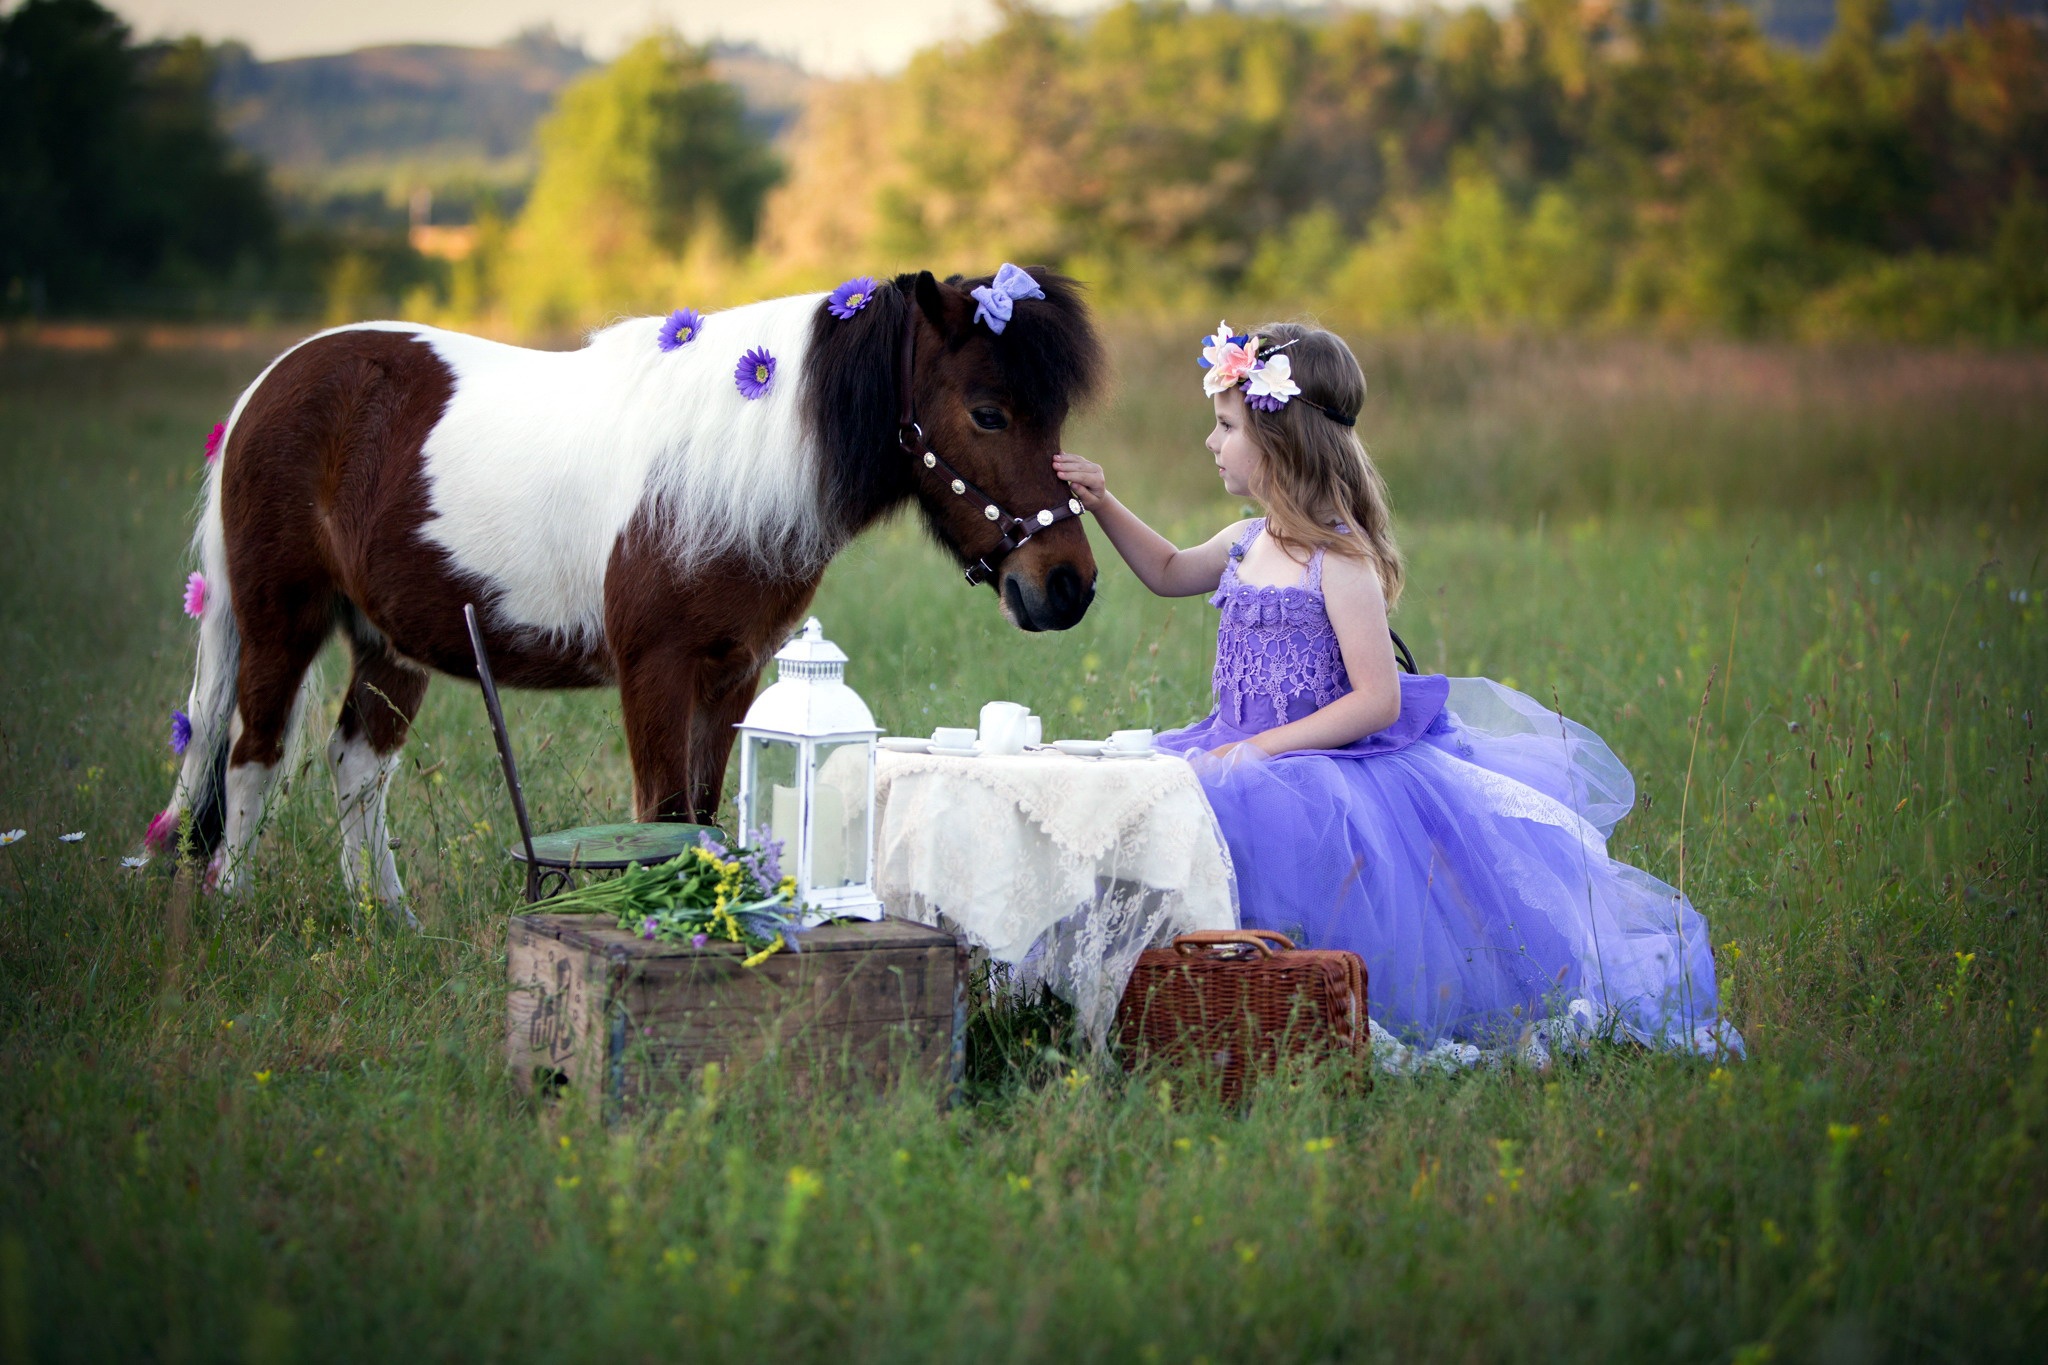 Лошадку навести навести. Фотосессия с лошадьми. Детская фотосессия с лошадьми. Девочка и конь. Фотосессия с лошадьми дети.